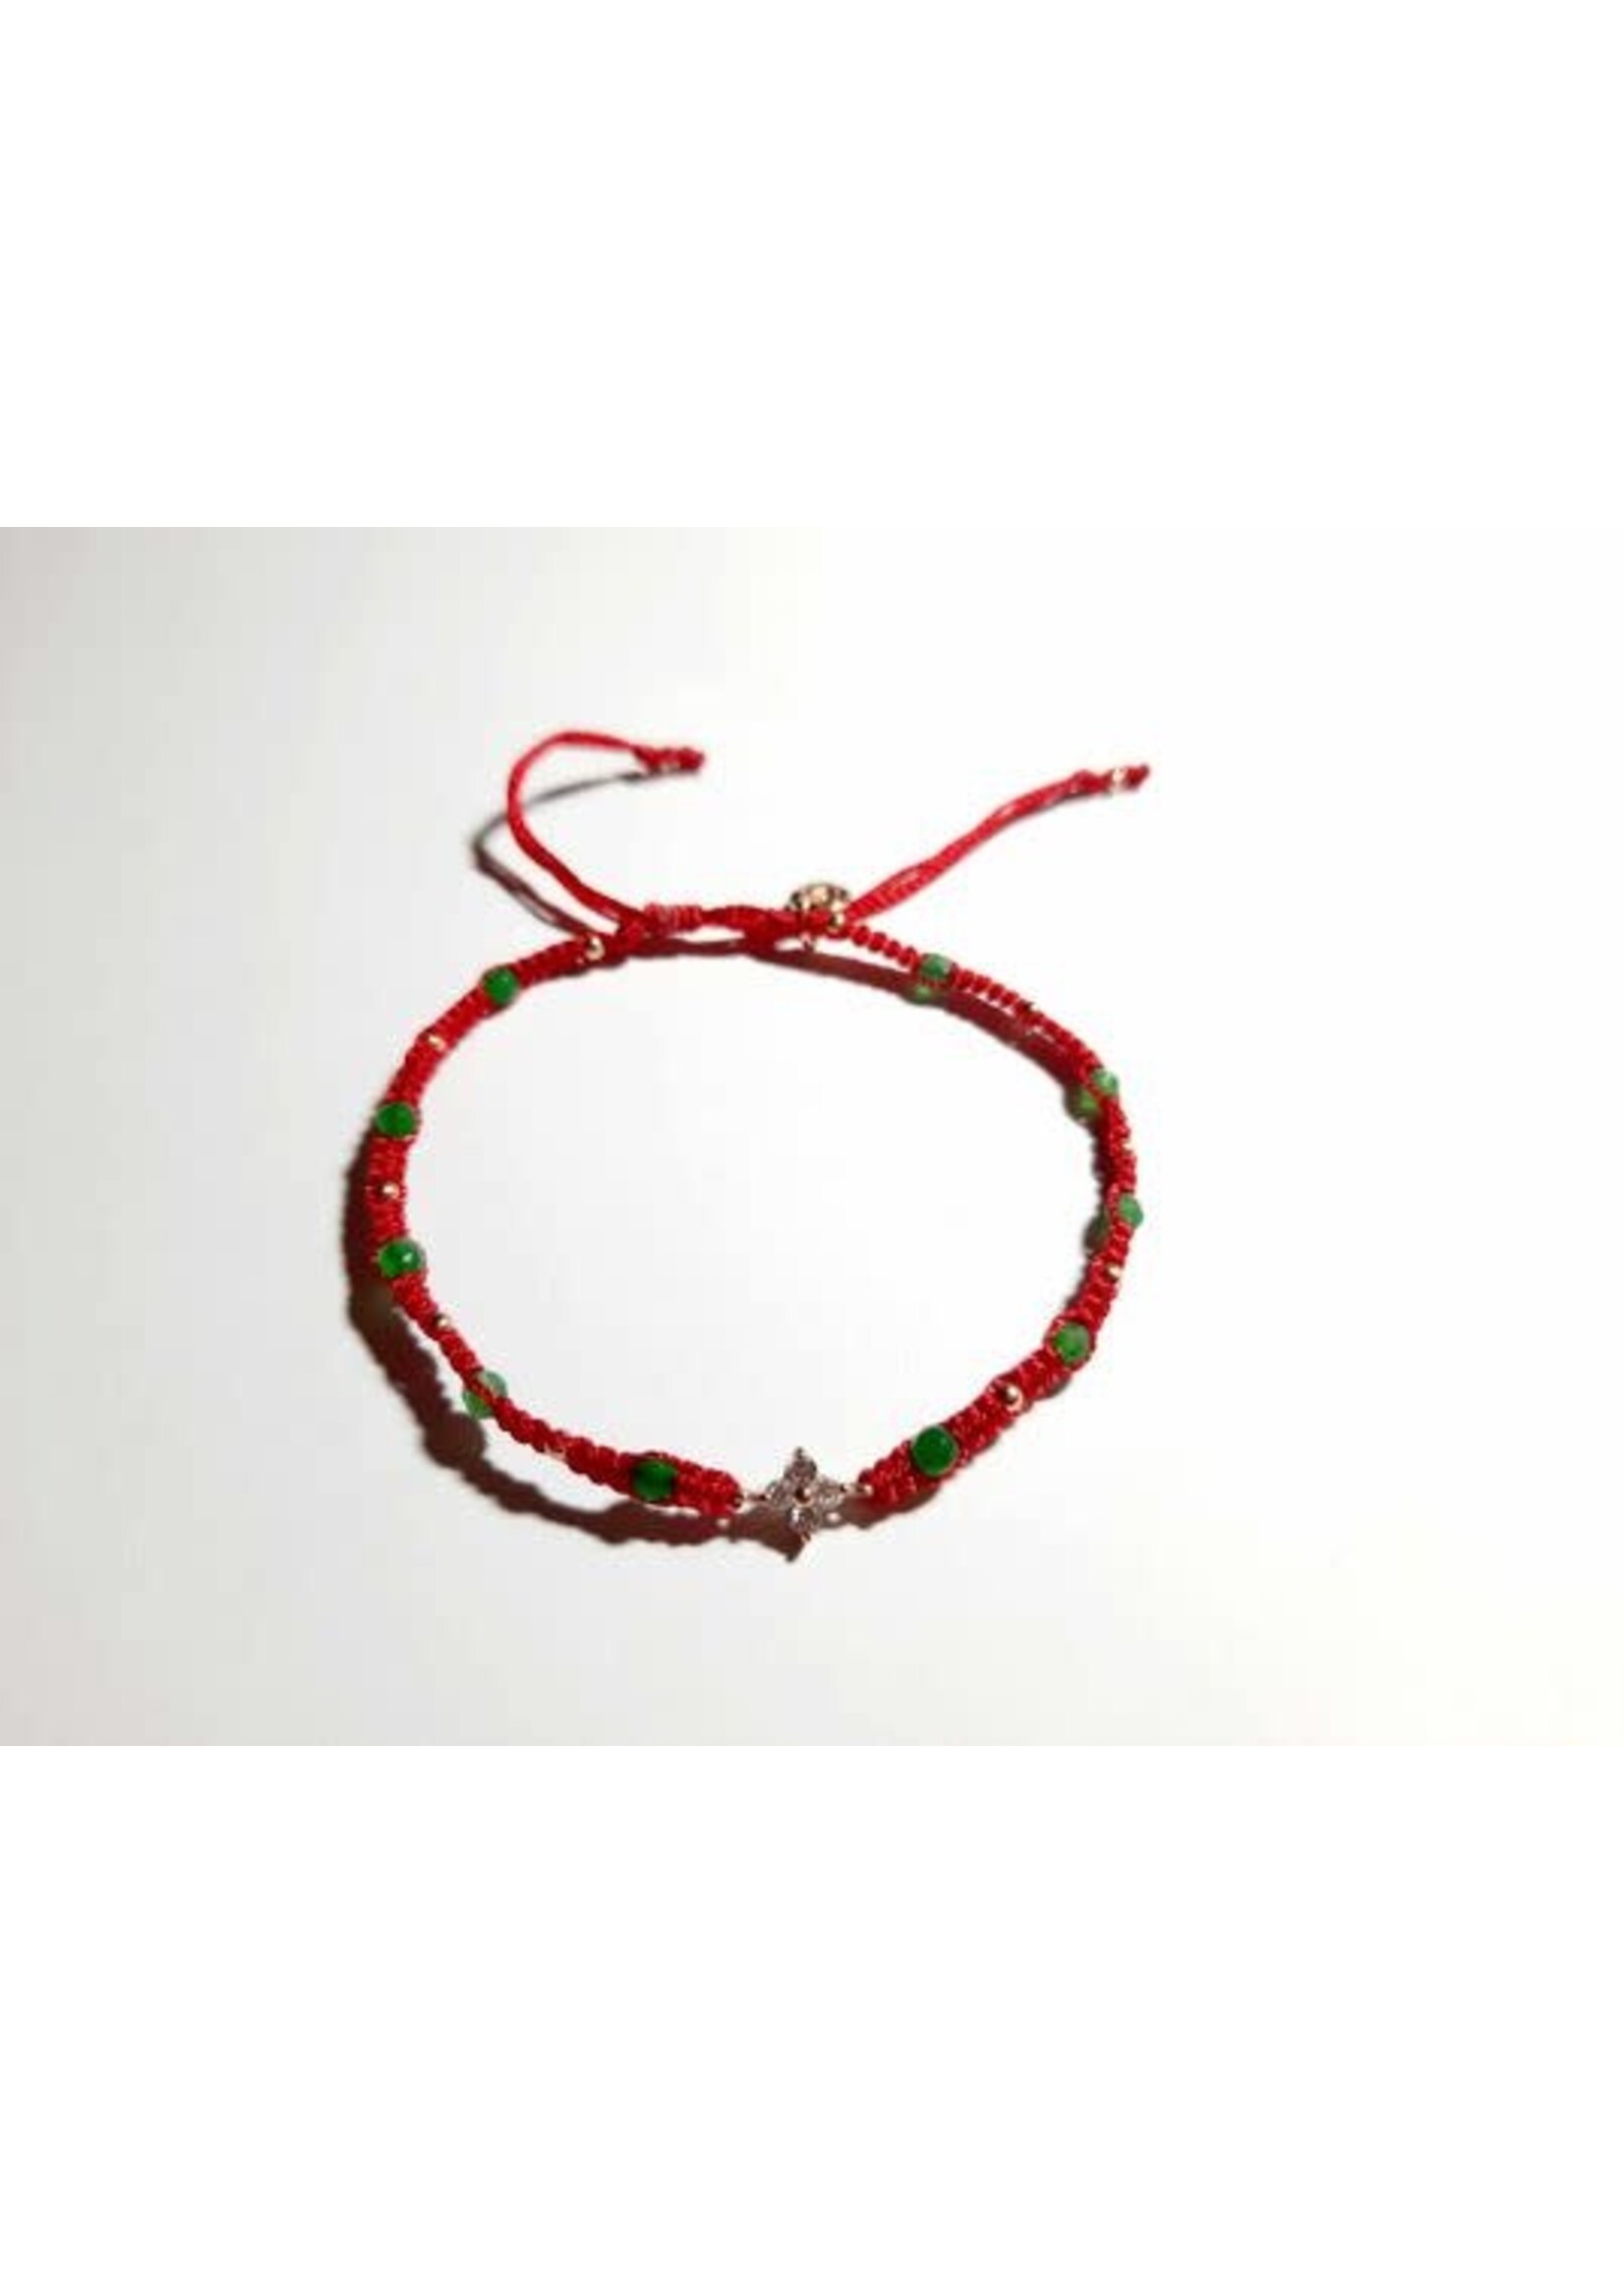 Barong Barong Barong Barong armband met schuifknoop, koord rood, agaat en zirkonia